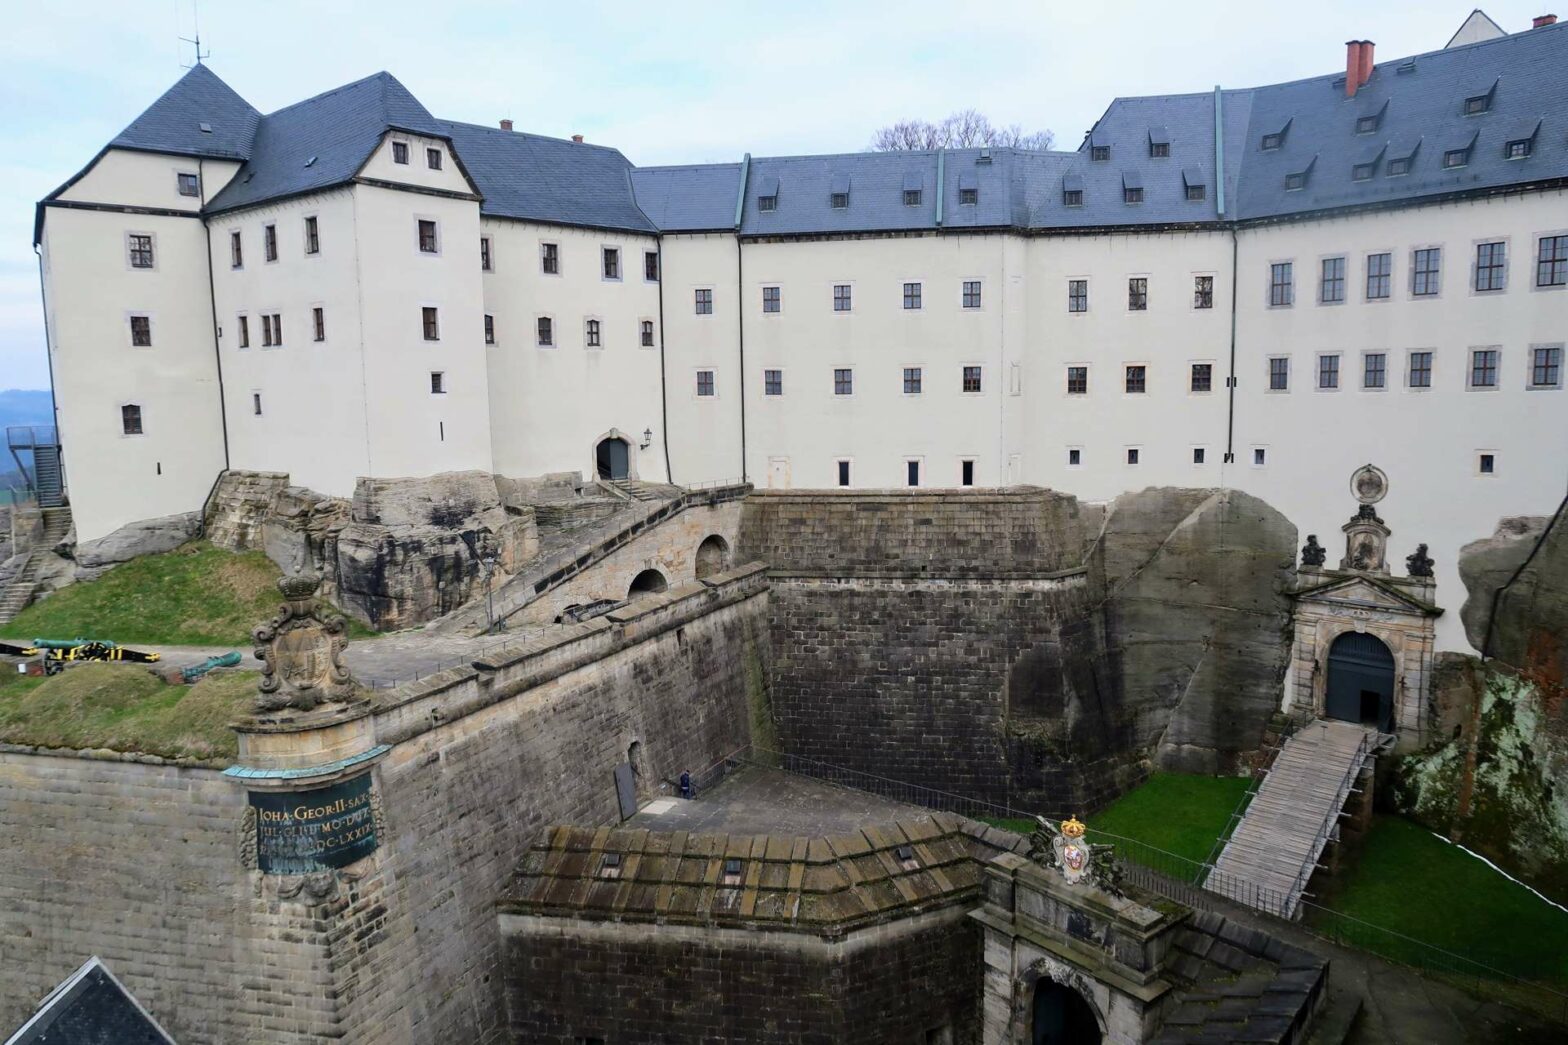 The Fortress of Königstein